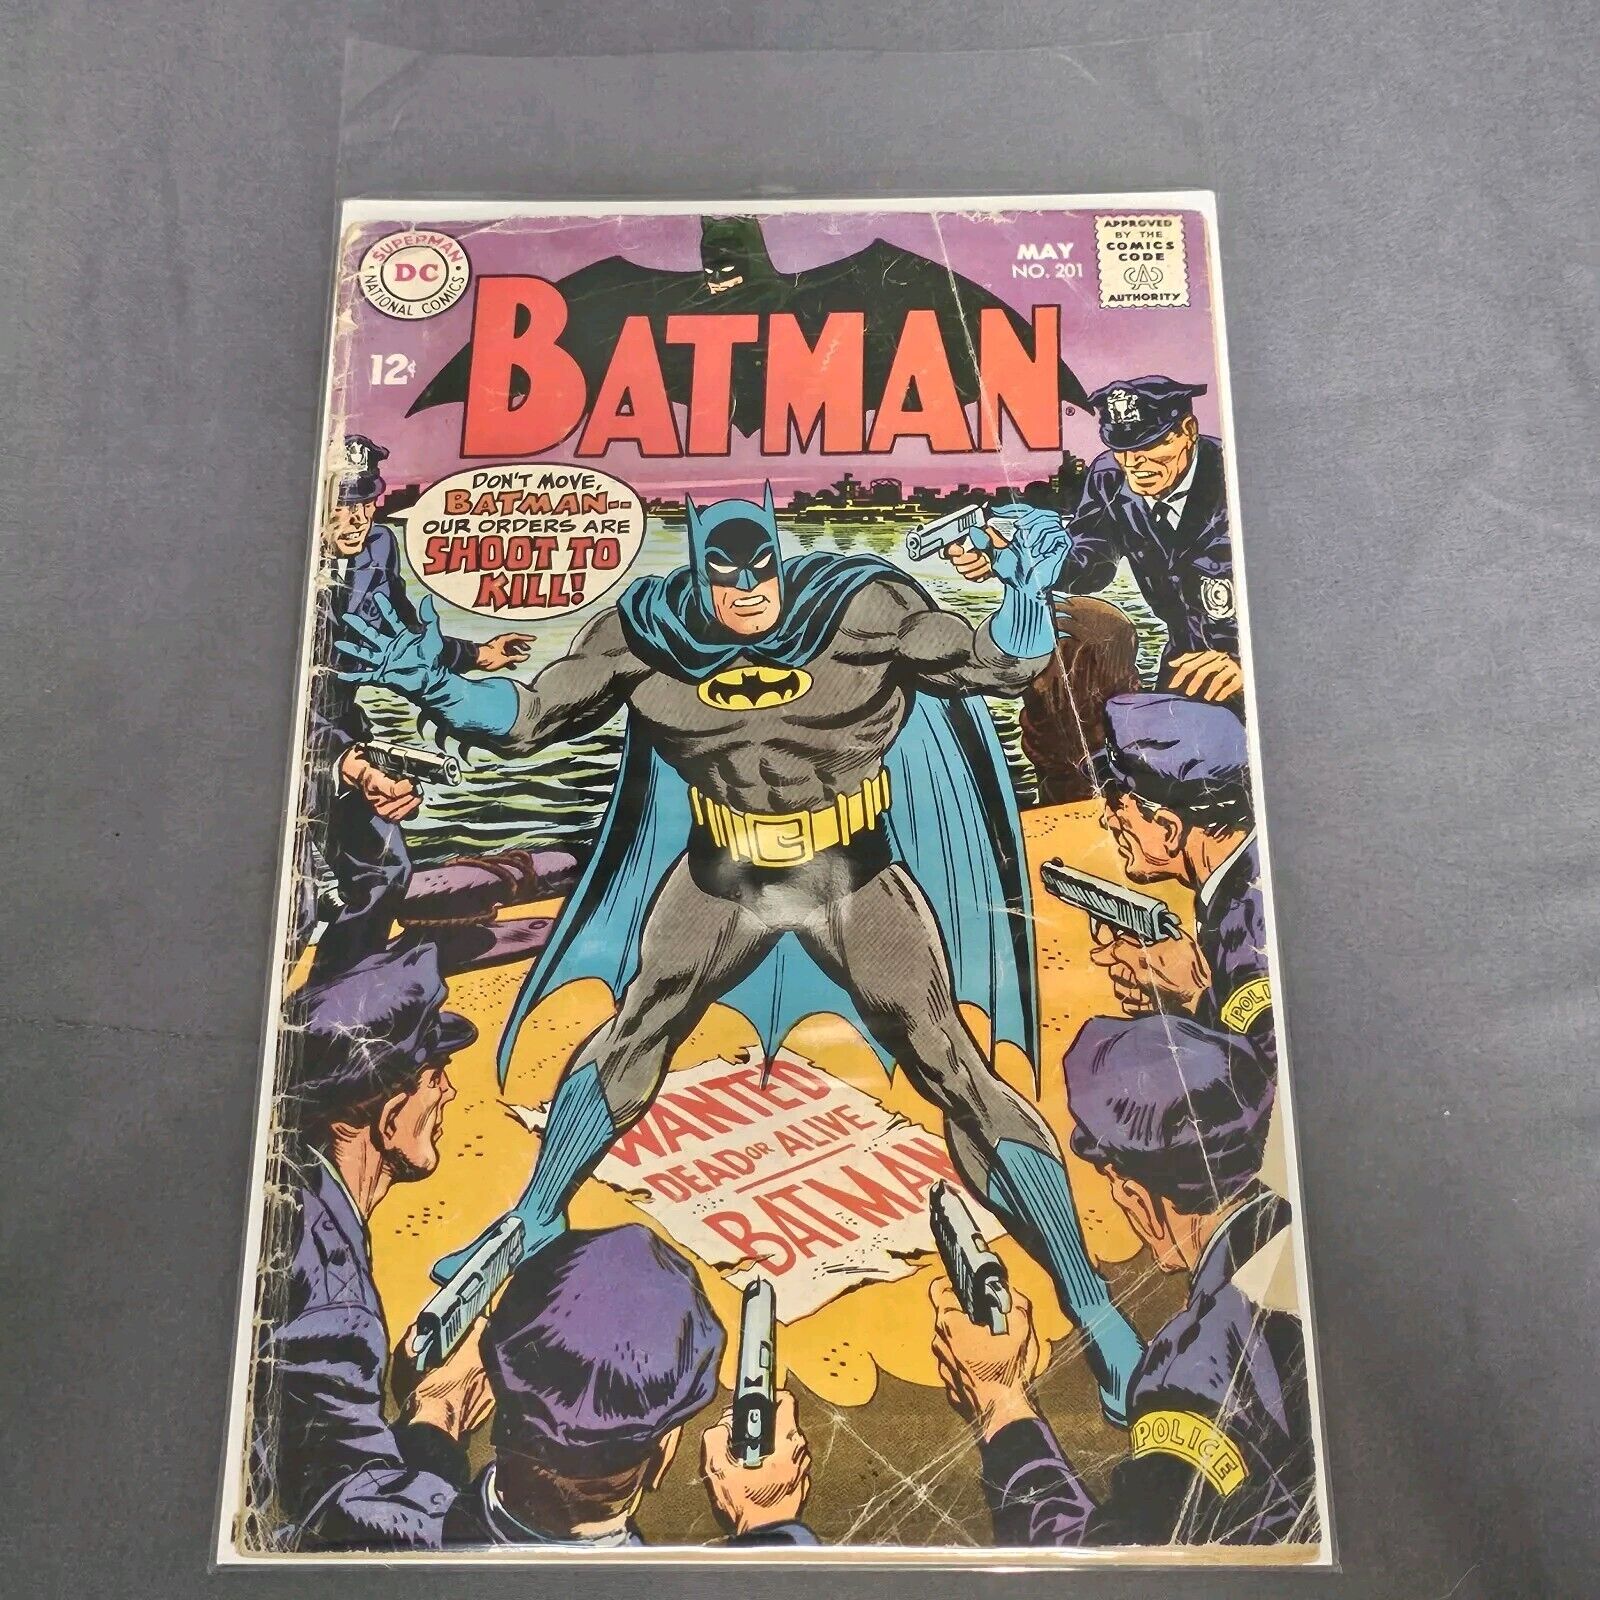 Batman #201 (May 1968) DC Comics - 1st Appearance of Gangland Guardians